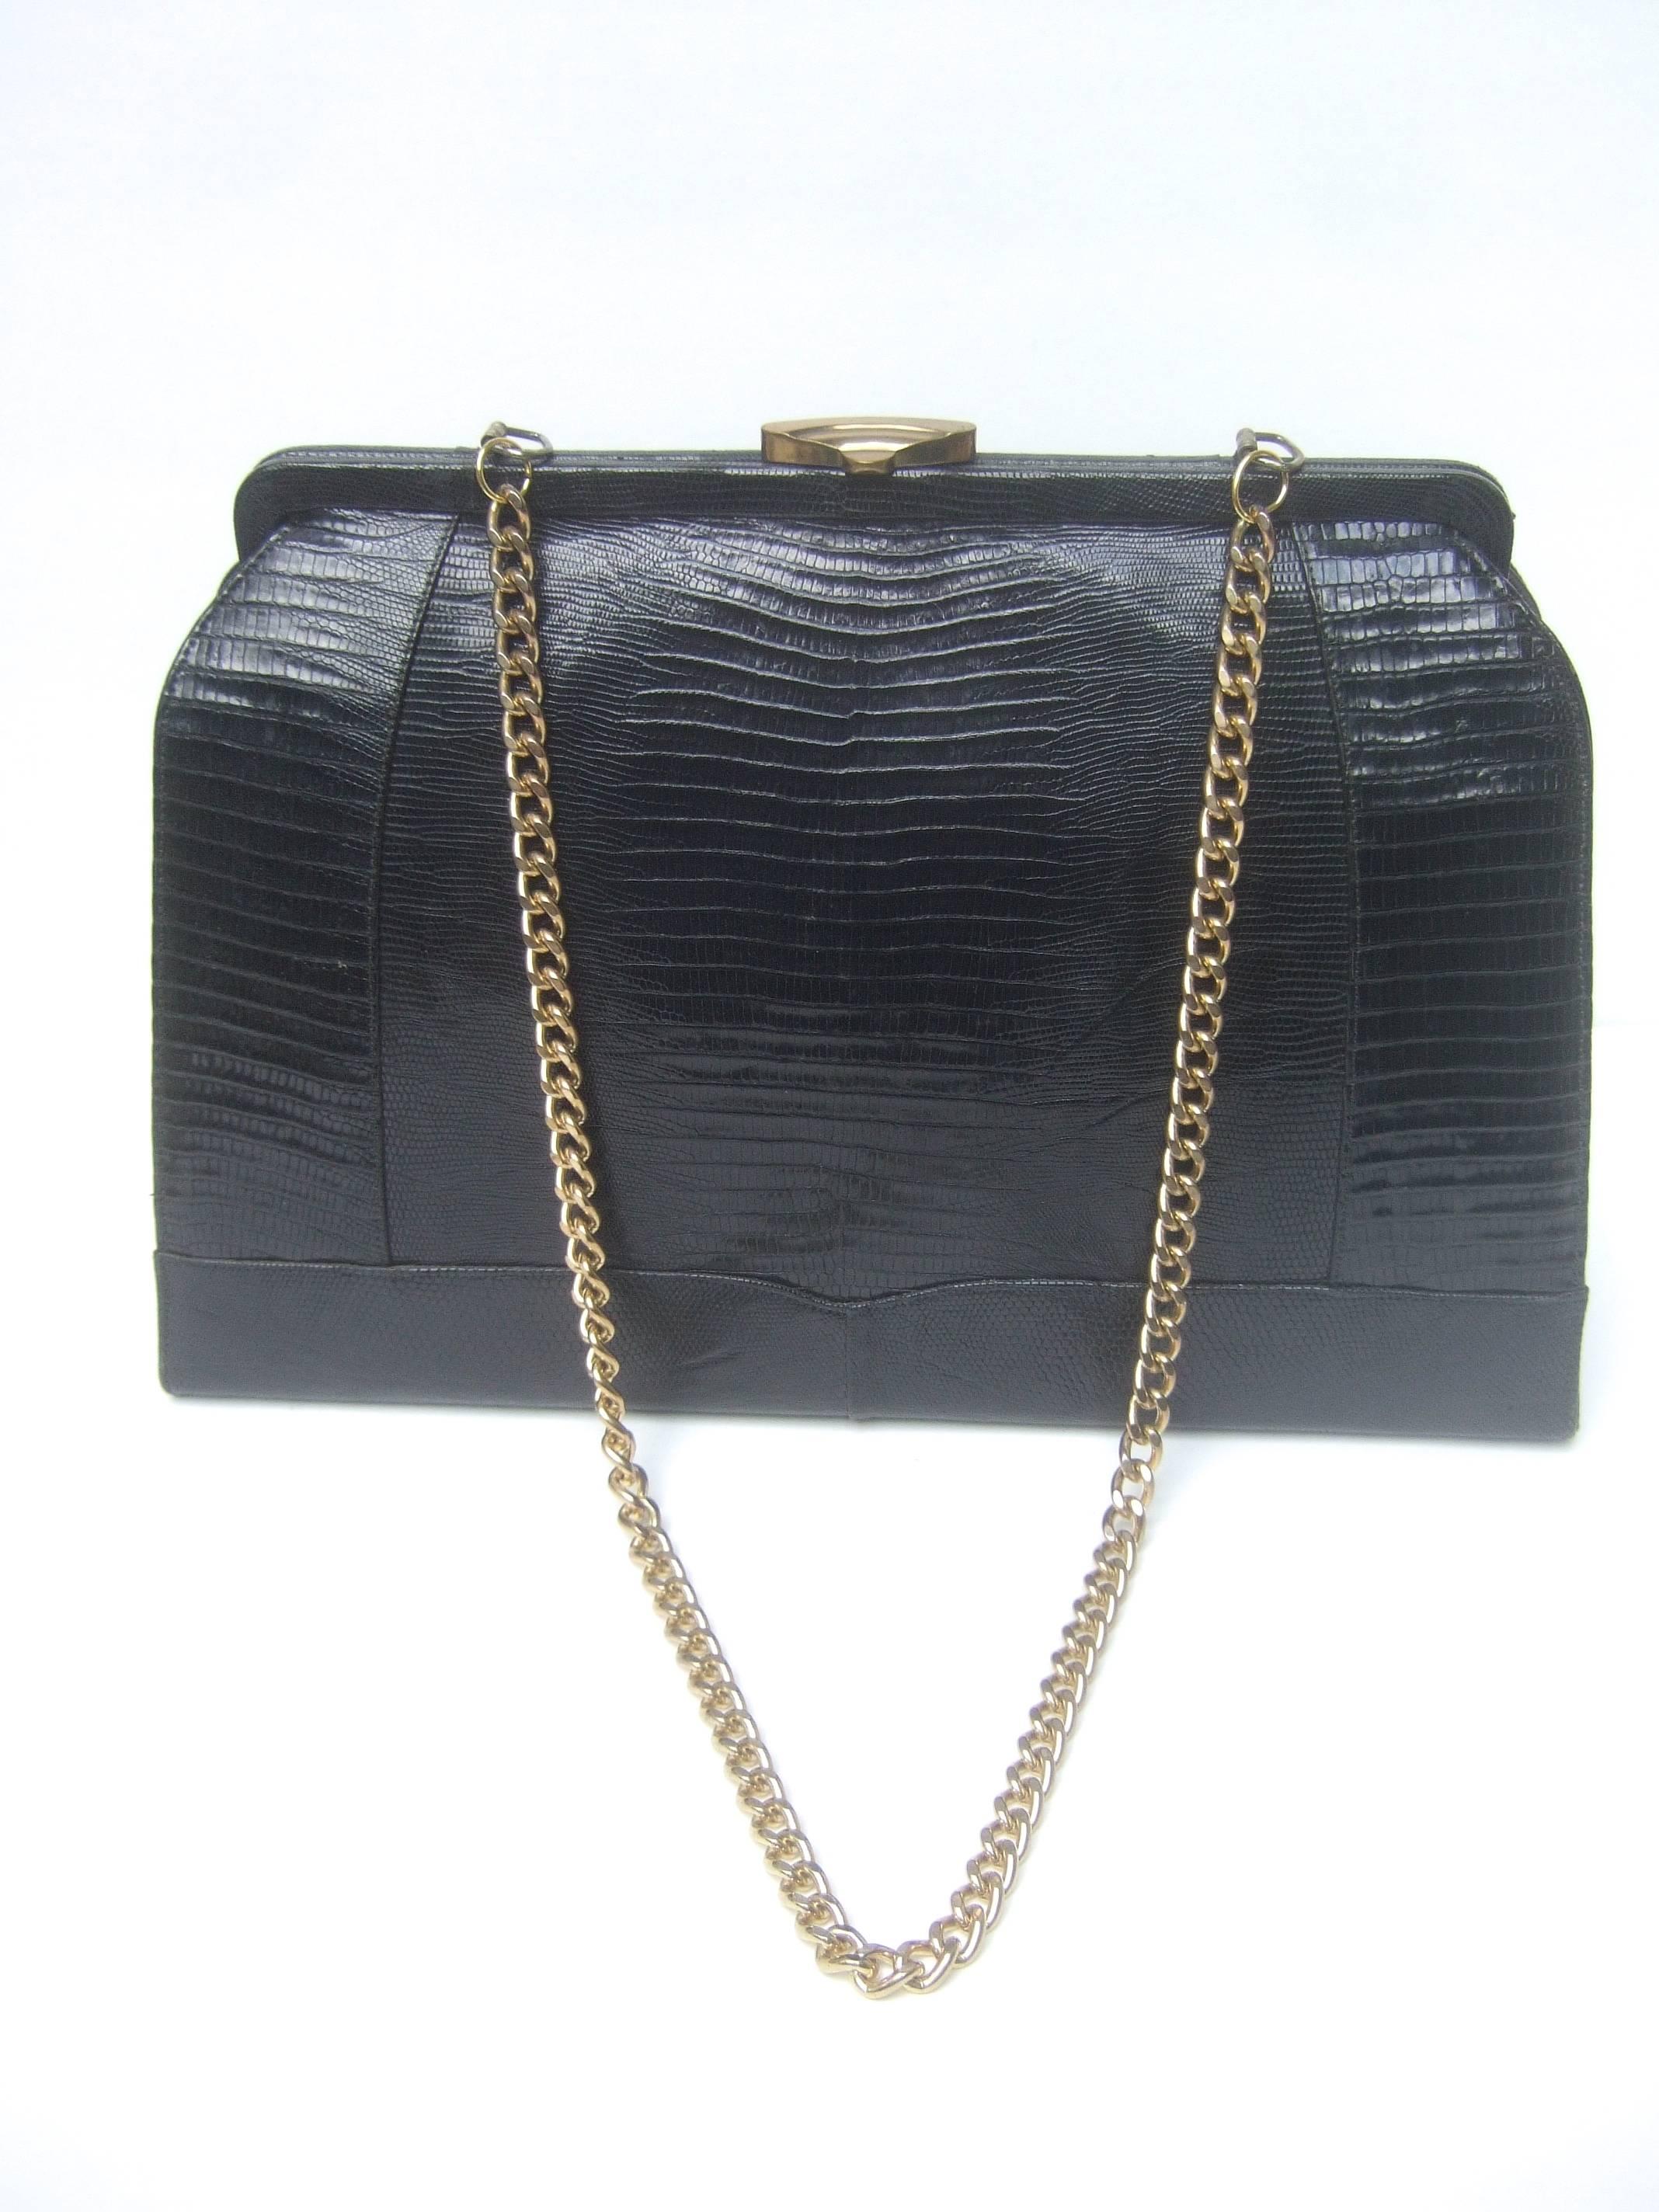 Sleek Ebony Lizard Skin Structured Handbag c 1960 4